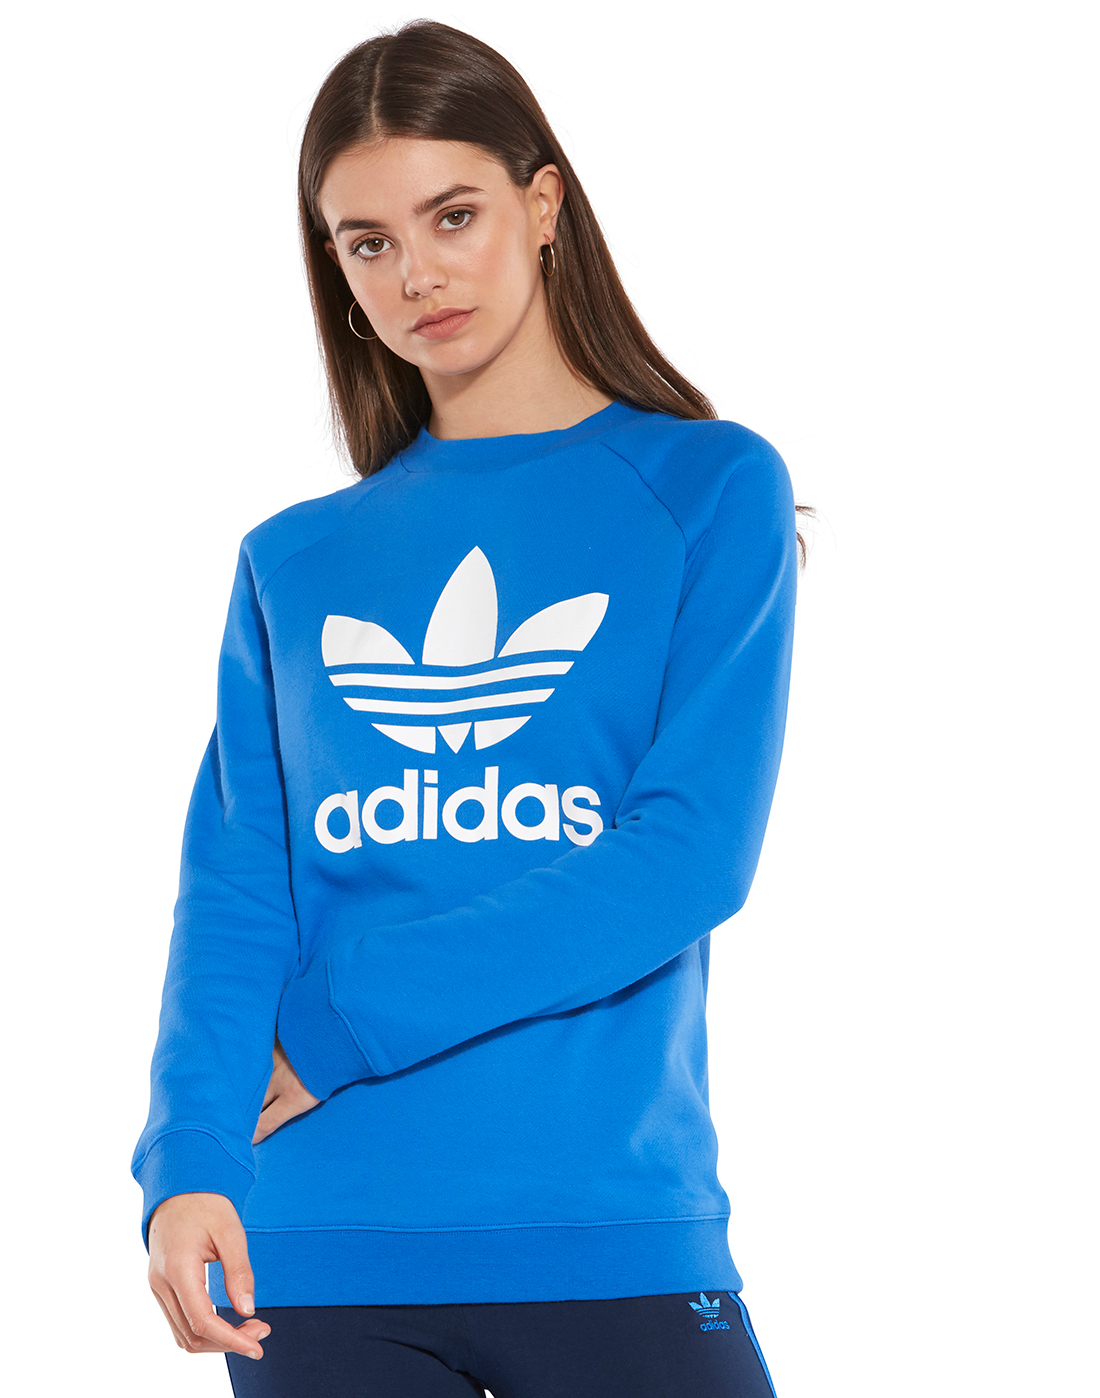 womens blue adidas sweatshirt